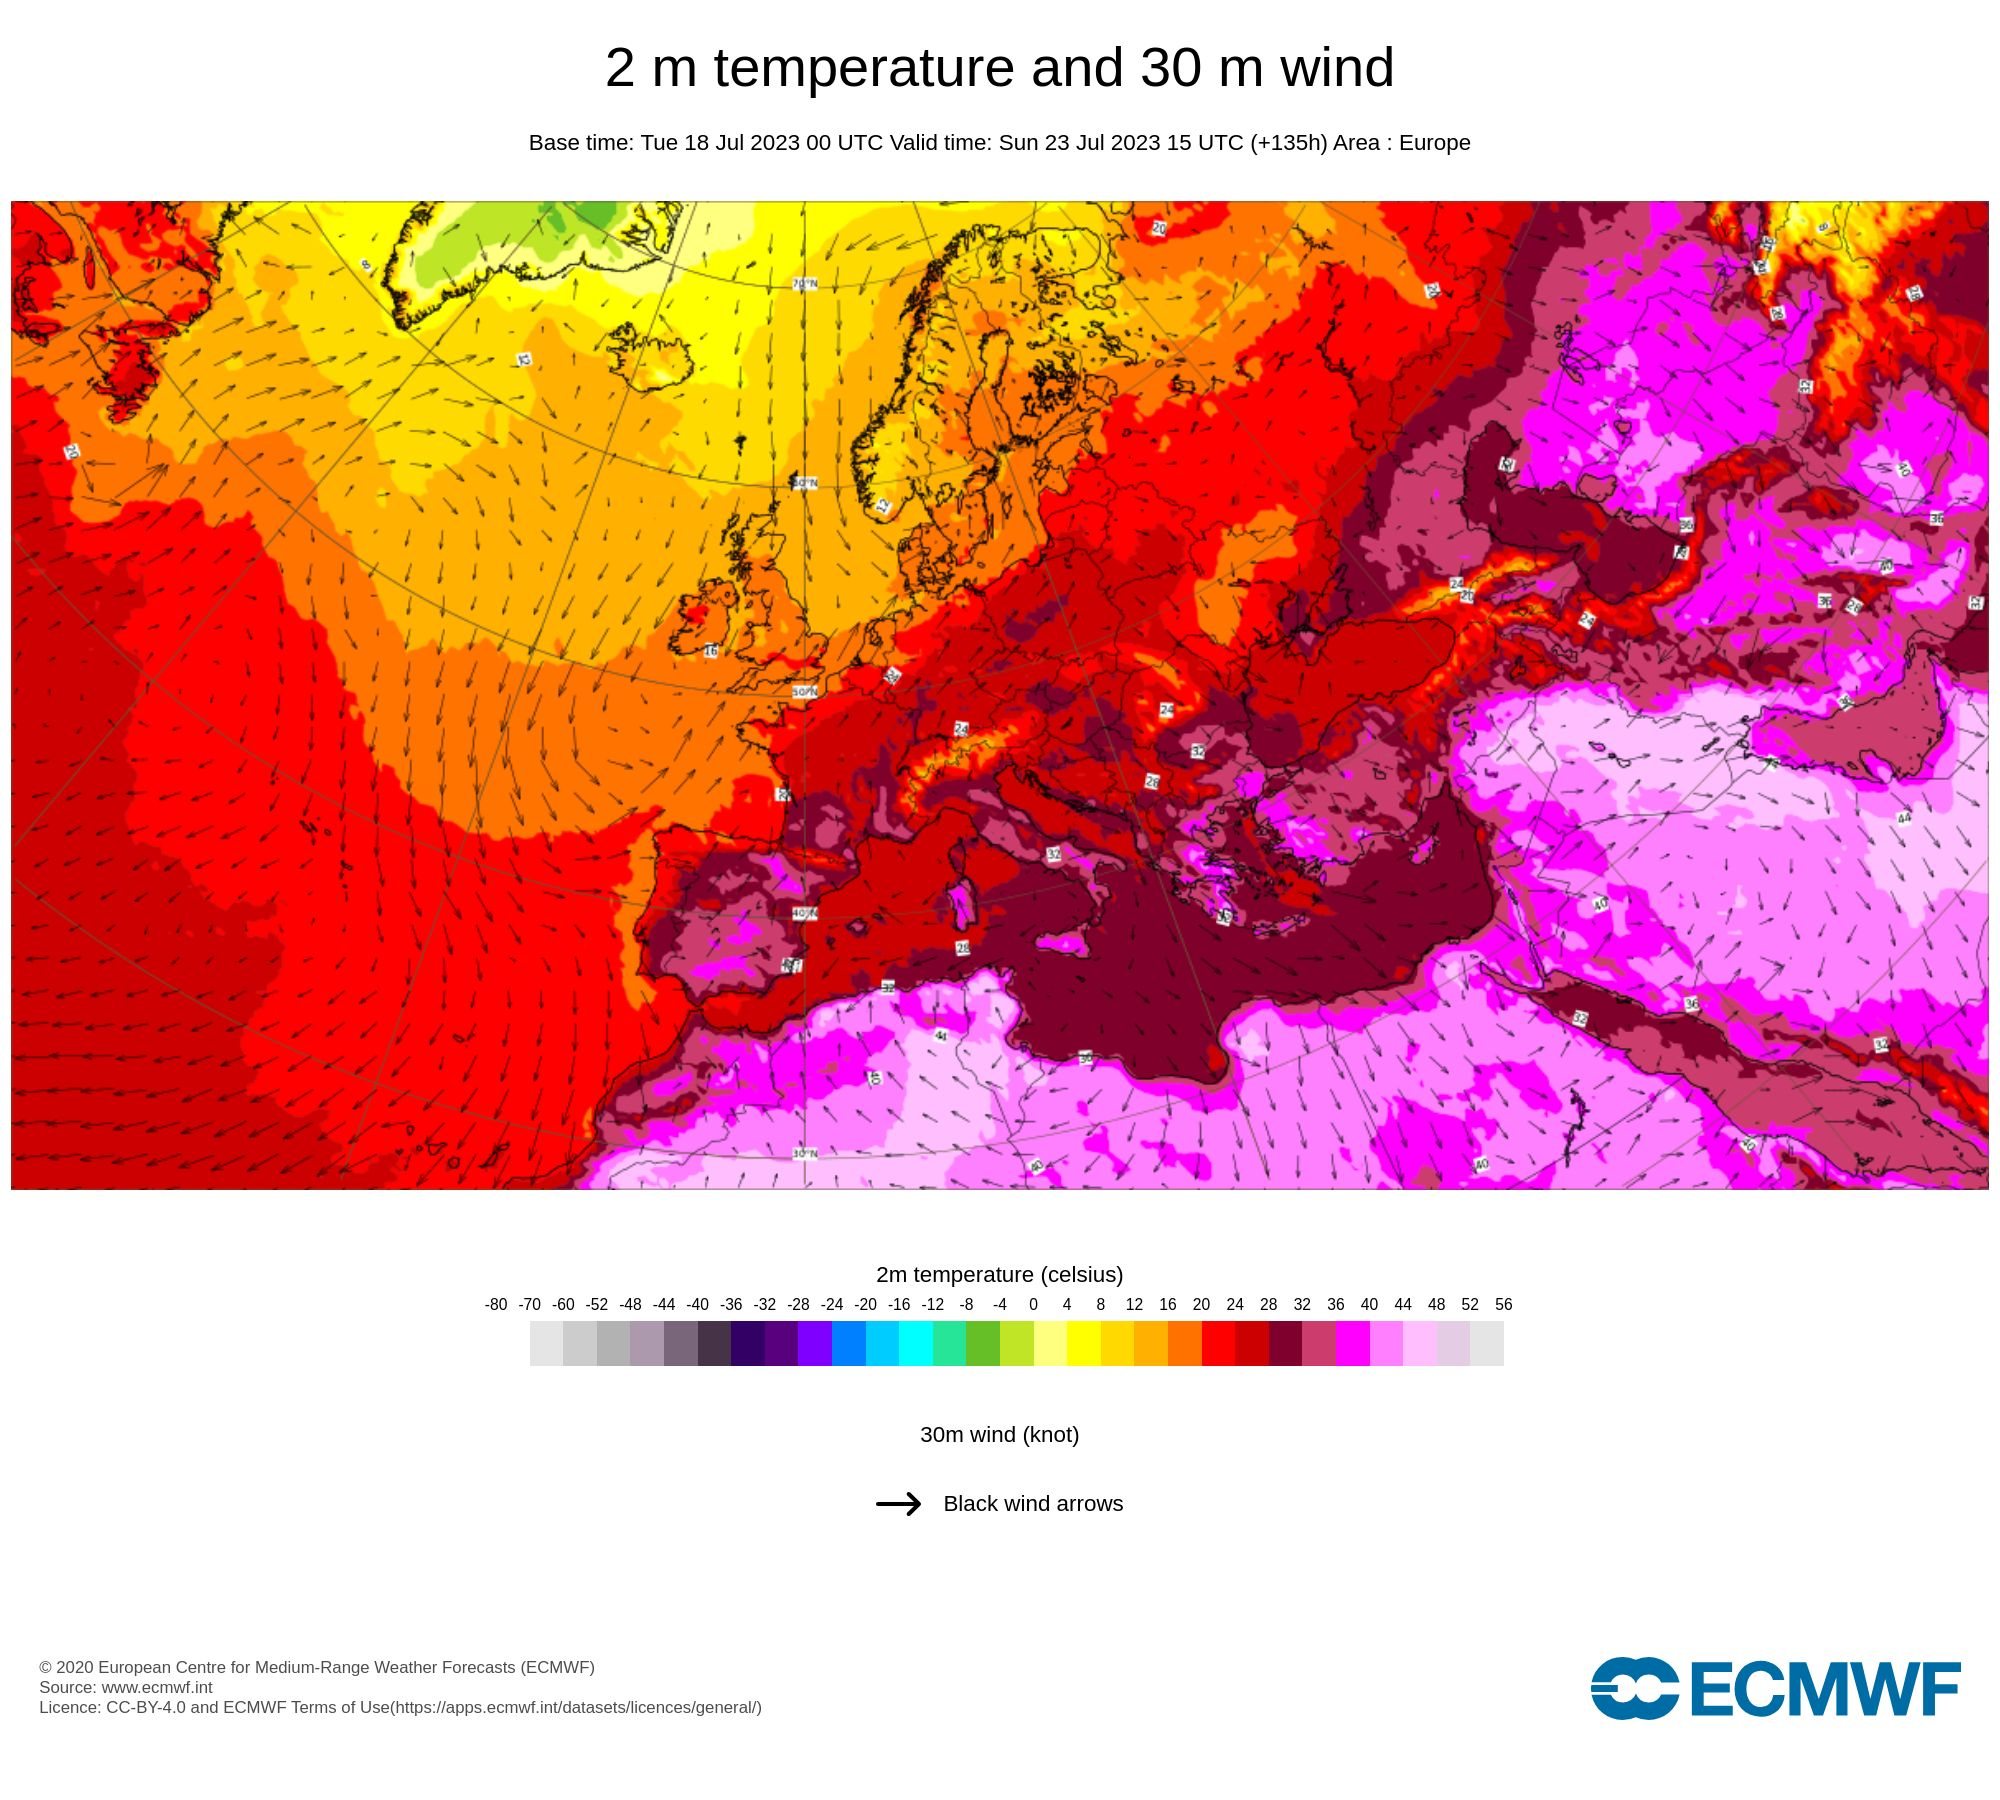 23 de julho de 2023: temperaturas às 16 horas (em Portugal continental)